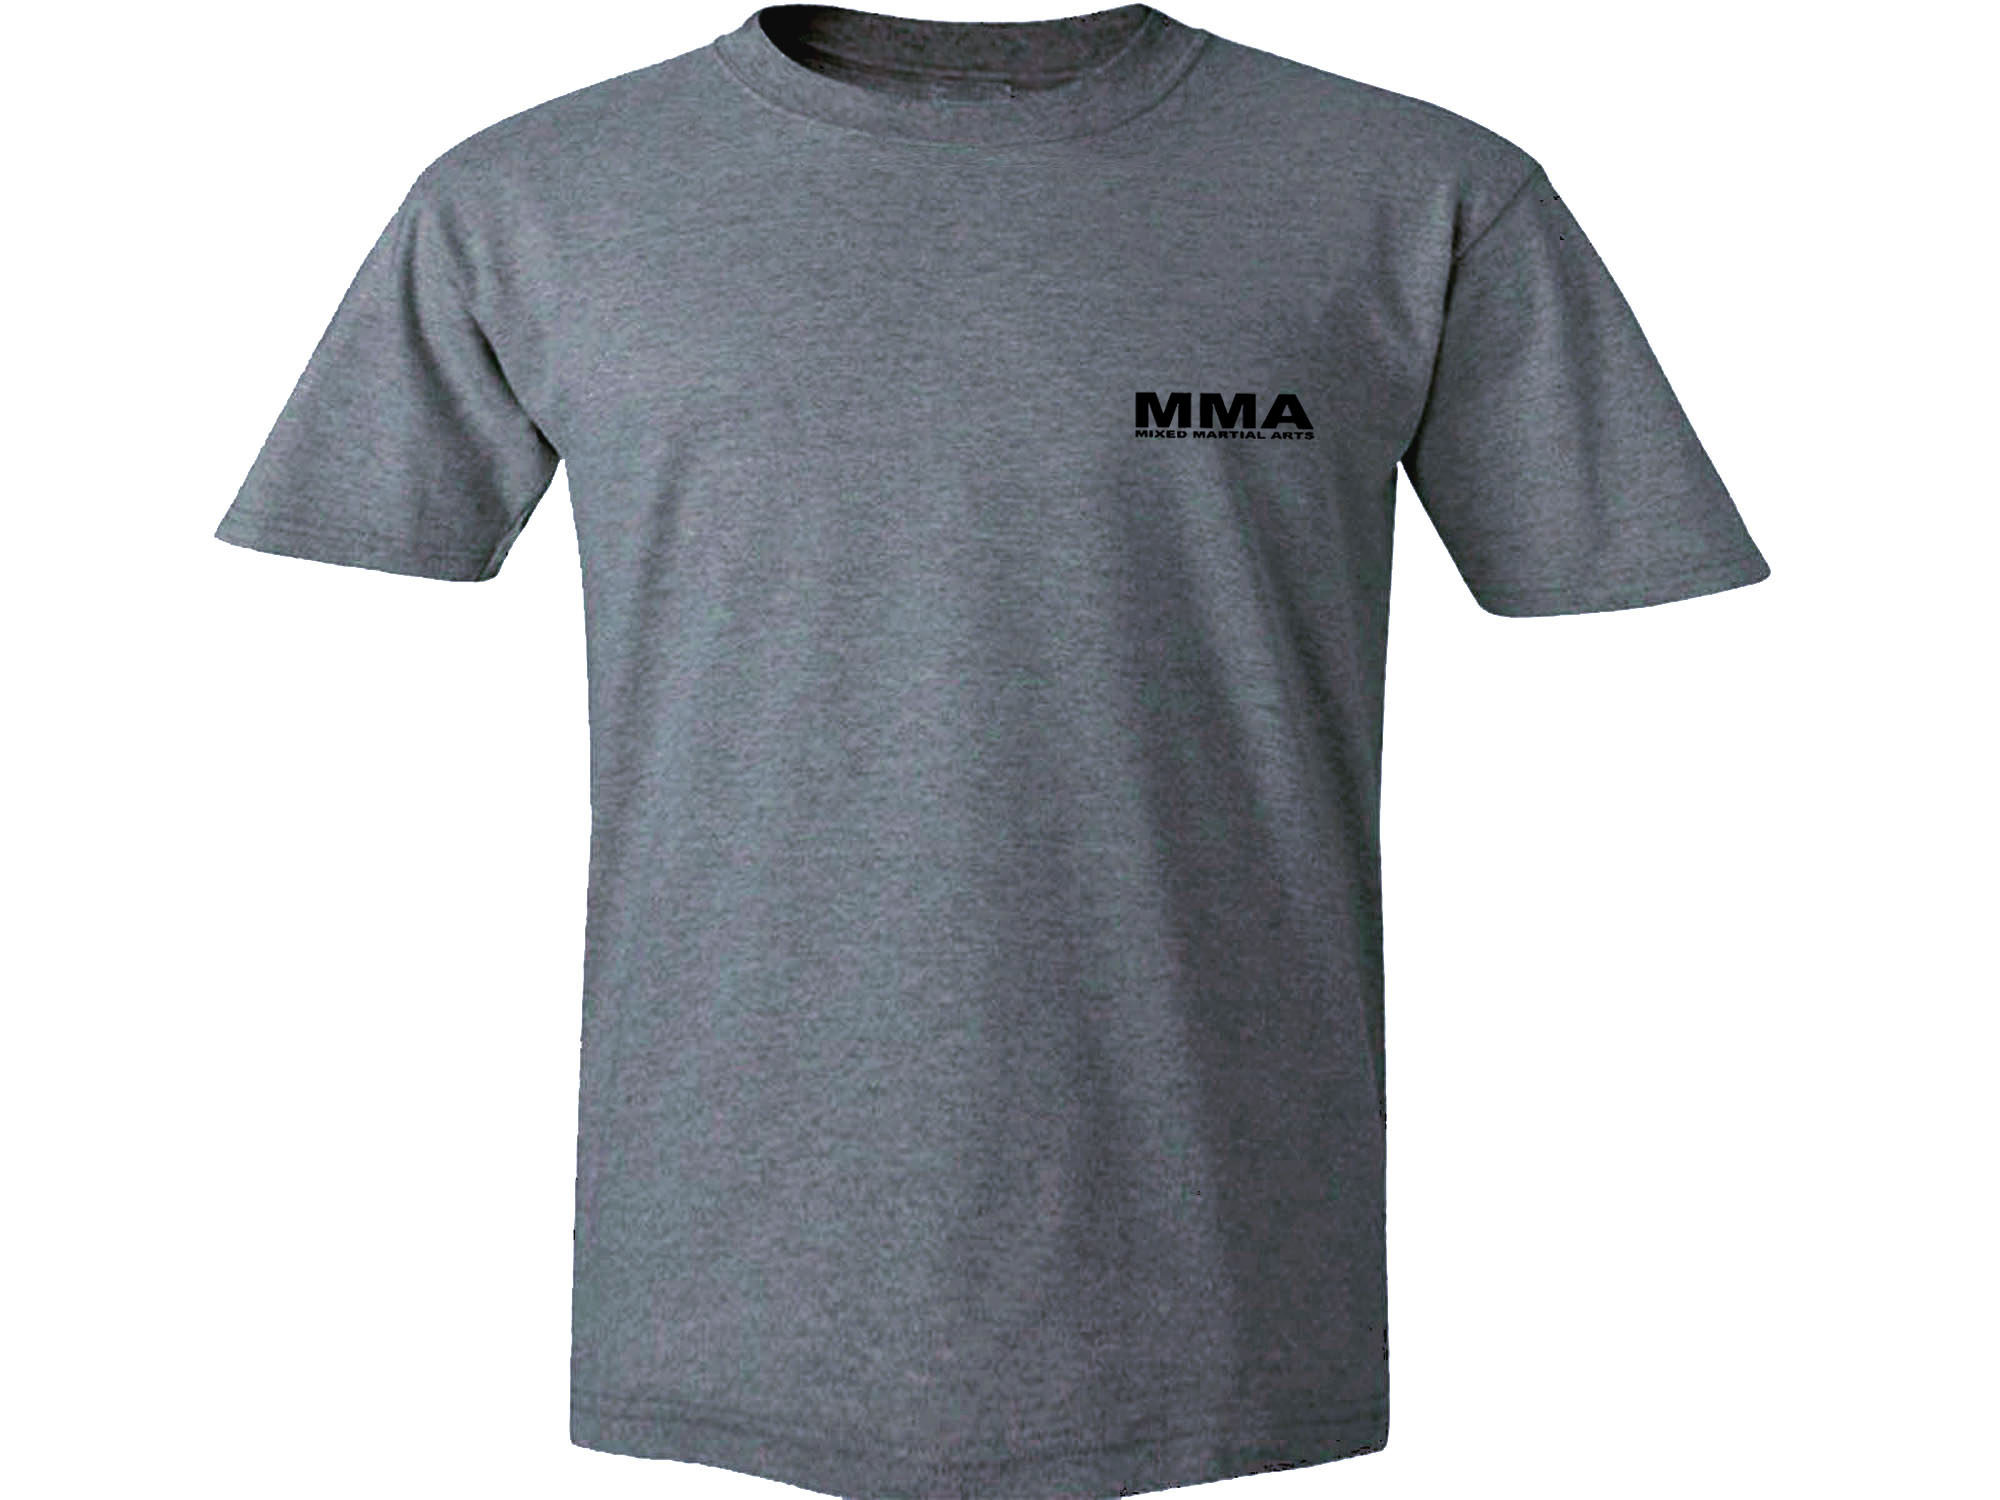 MMA mixed martial arts gray t-shirt 2